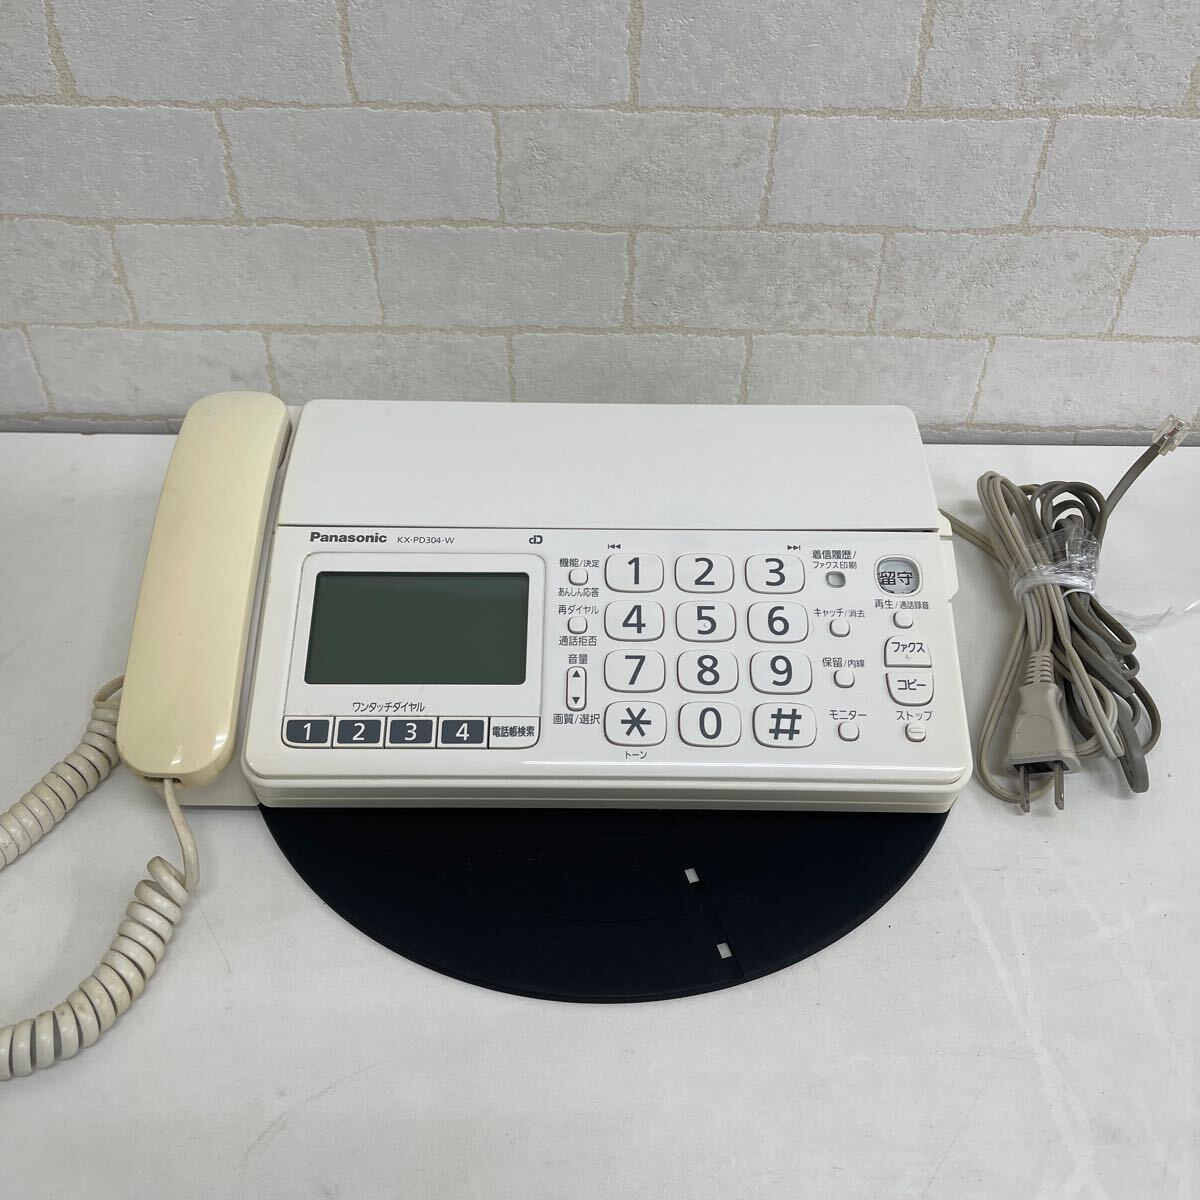 Y311. 4. Panasonic FAX電話機 親機 KX-PD304-W ホワイトカラー ワンタッチダイヤル ファックス機能 ファックス未チェック 焼けあり. _画像1